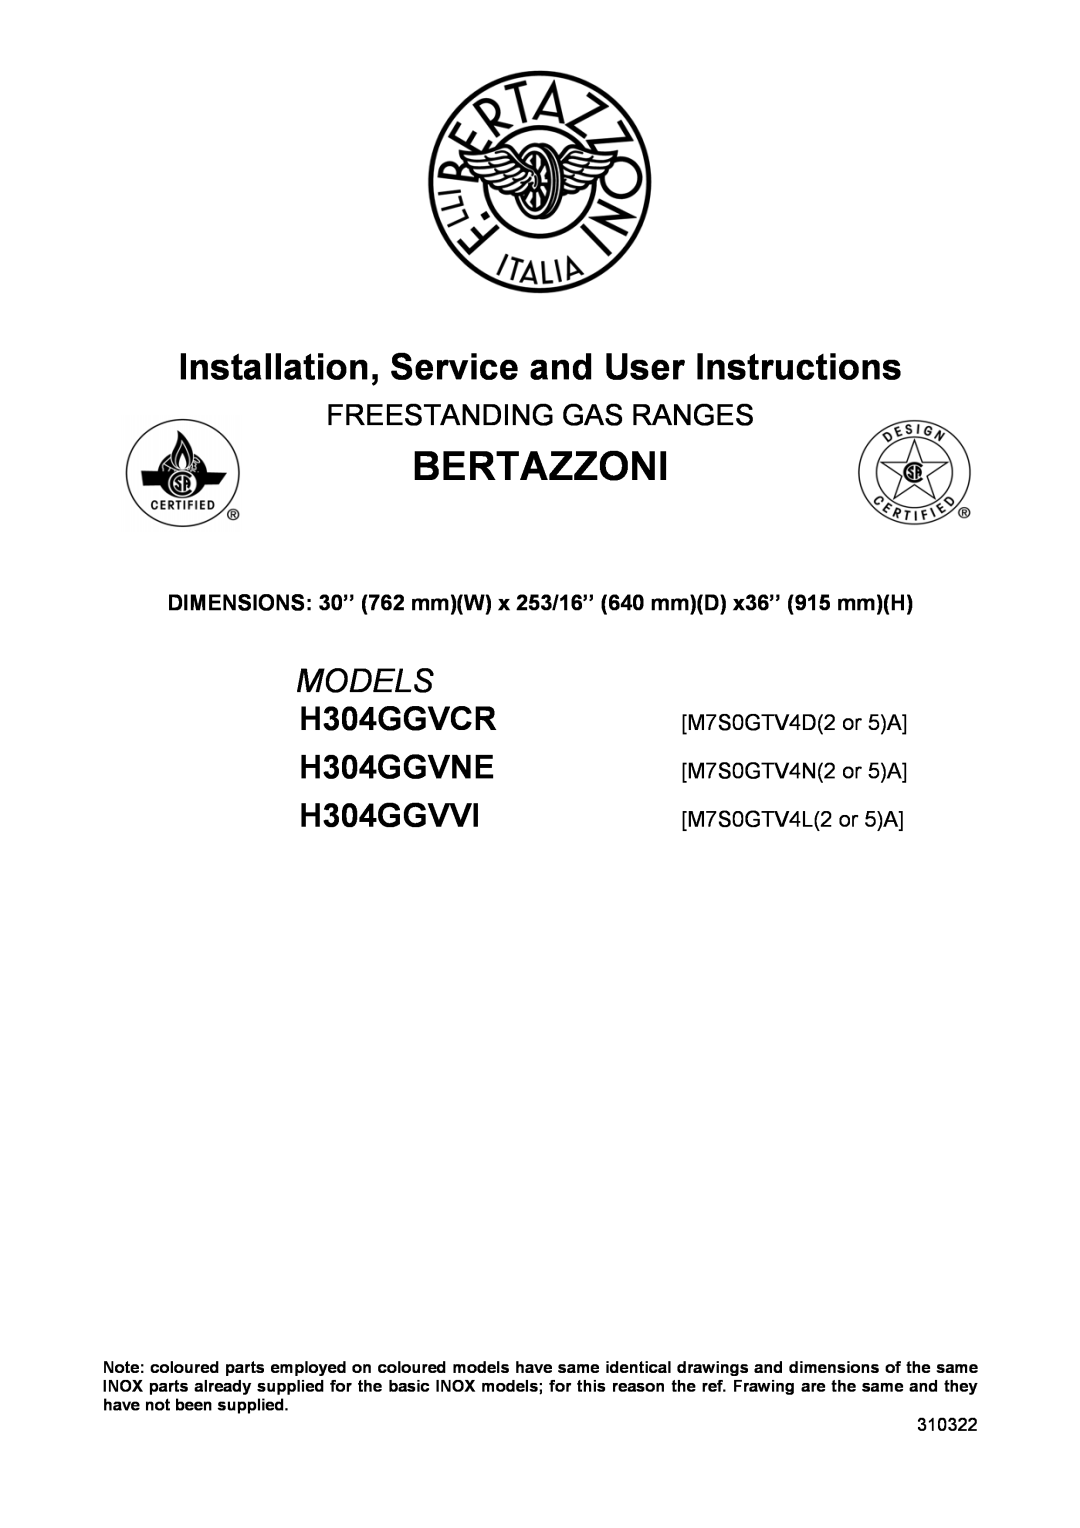 Bertazzoni H304GGVCR manual Freestanding Gas Ranges, Bertazzoni, Installation, Service and User Instructions, Models 